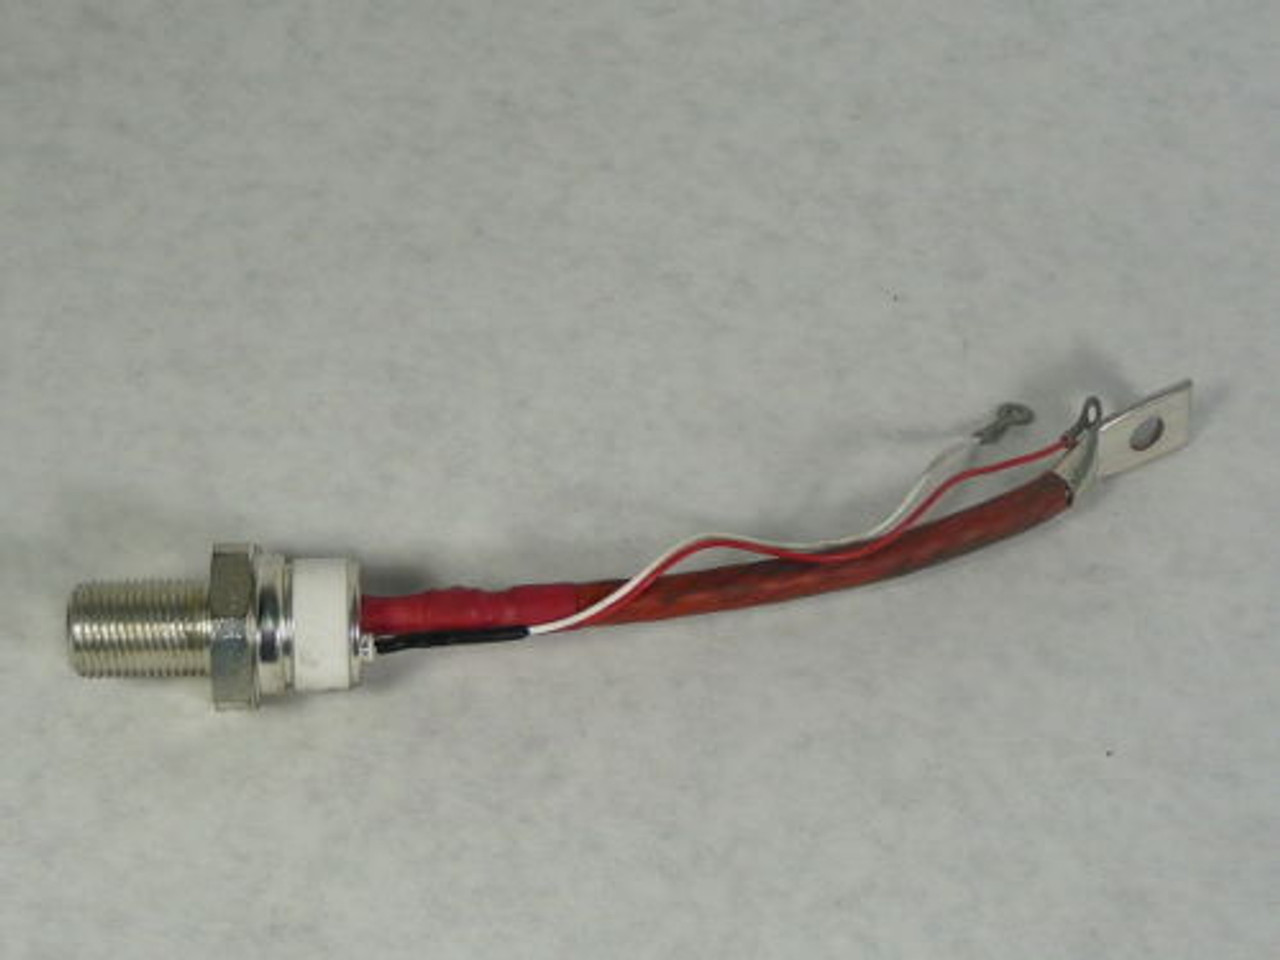 International Rectifier S23DGF2B0 Inverter Thryistor 175-370A USED